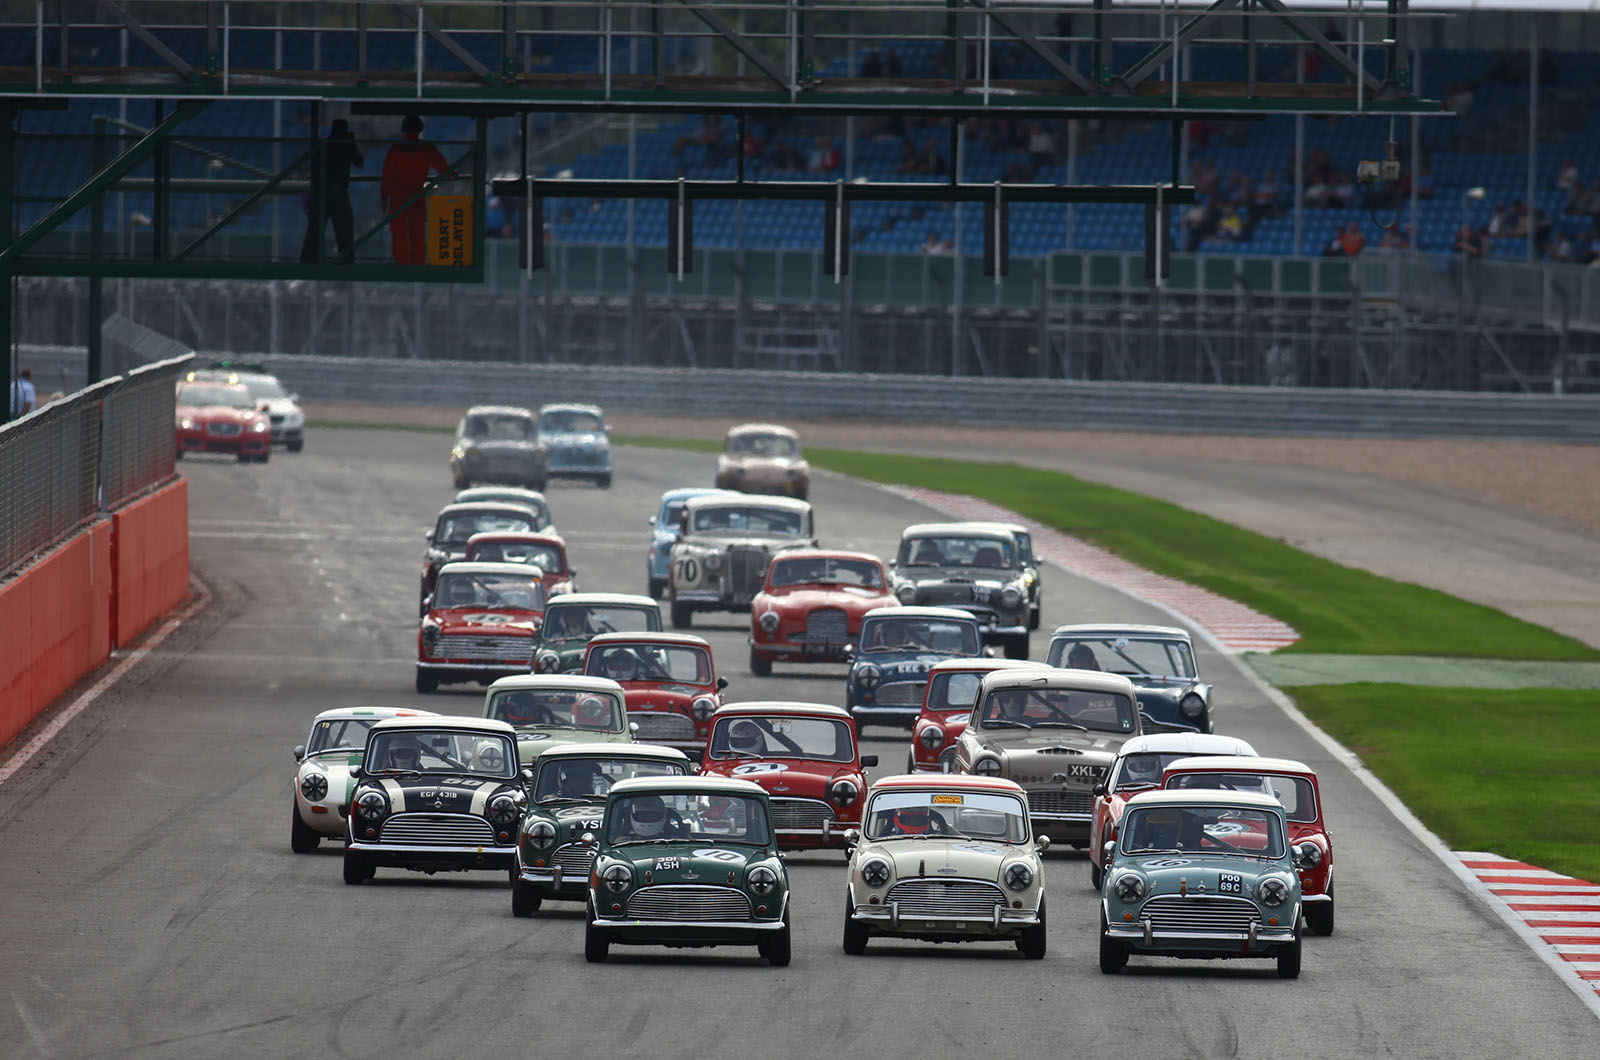 Classic & Sports Car – It's a Mini anniversary at the Silverstone Classic